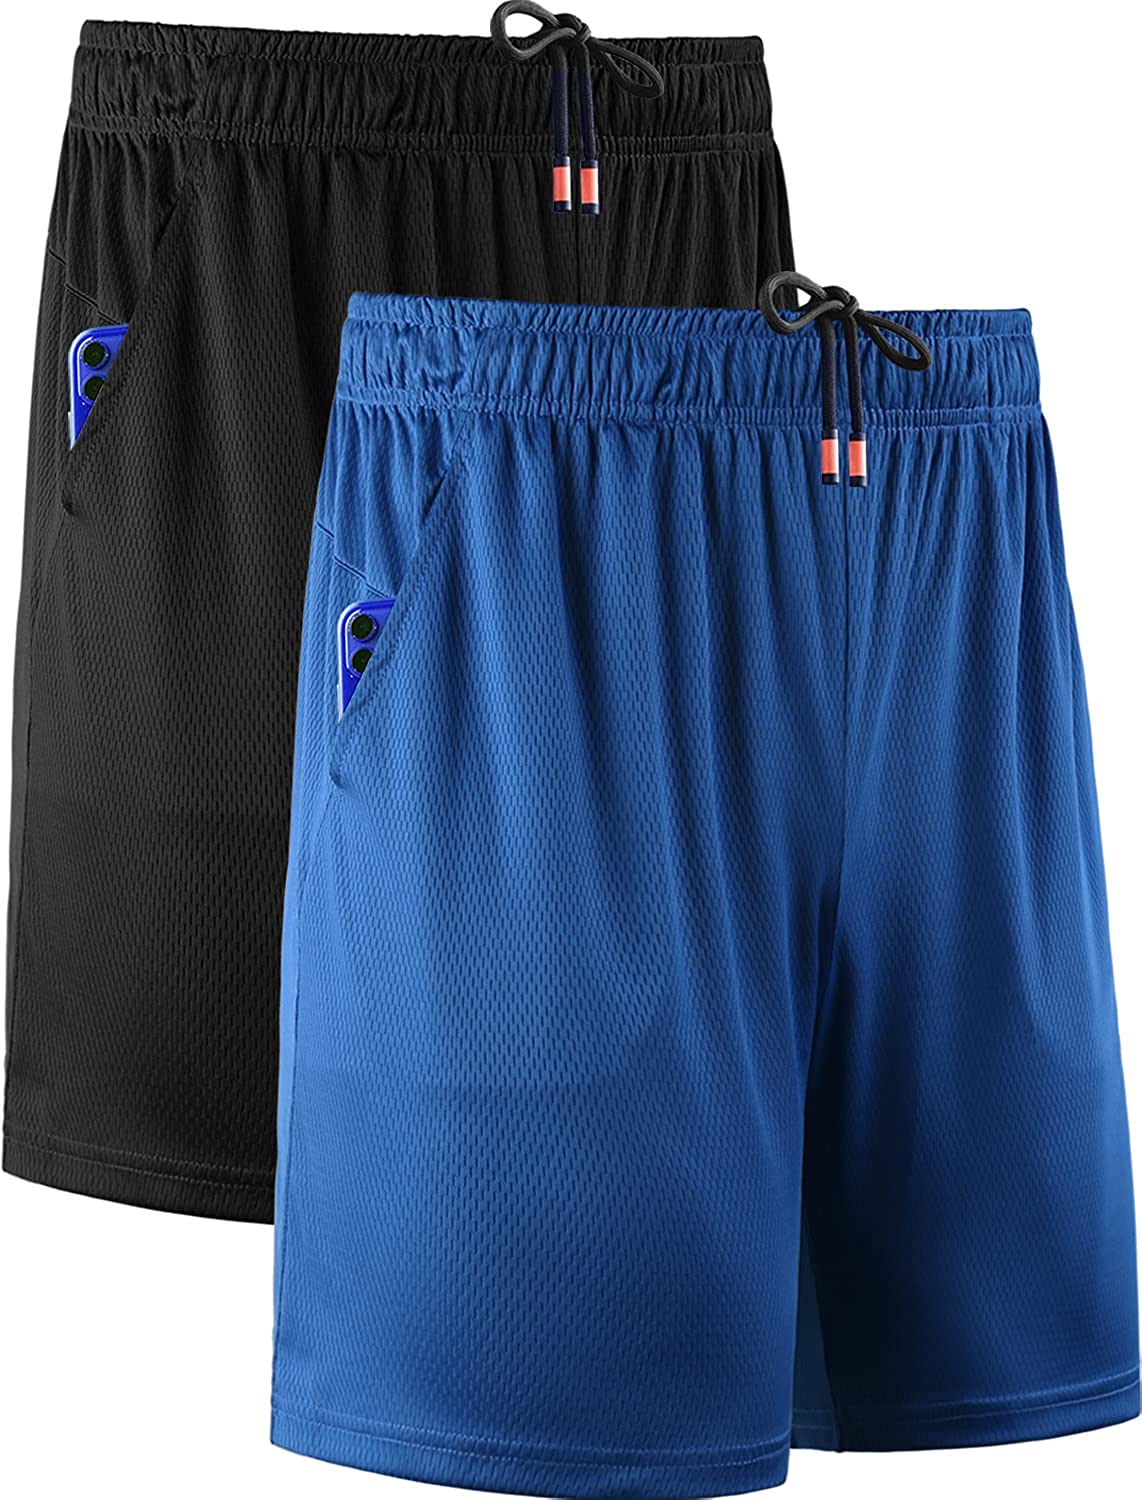 Neleus Men's 7 inch Running Shorts Lightweight Workout Shorts with Pockets 